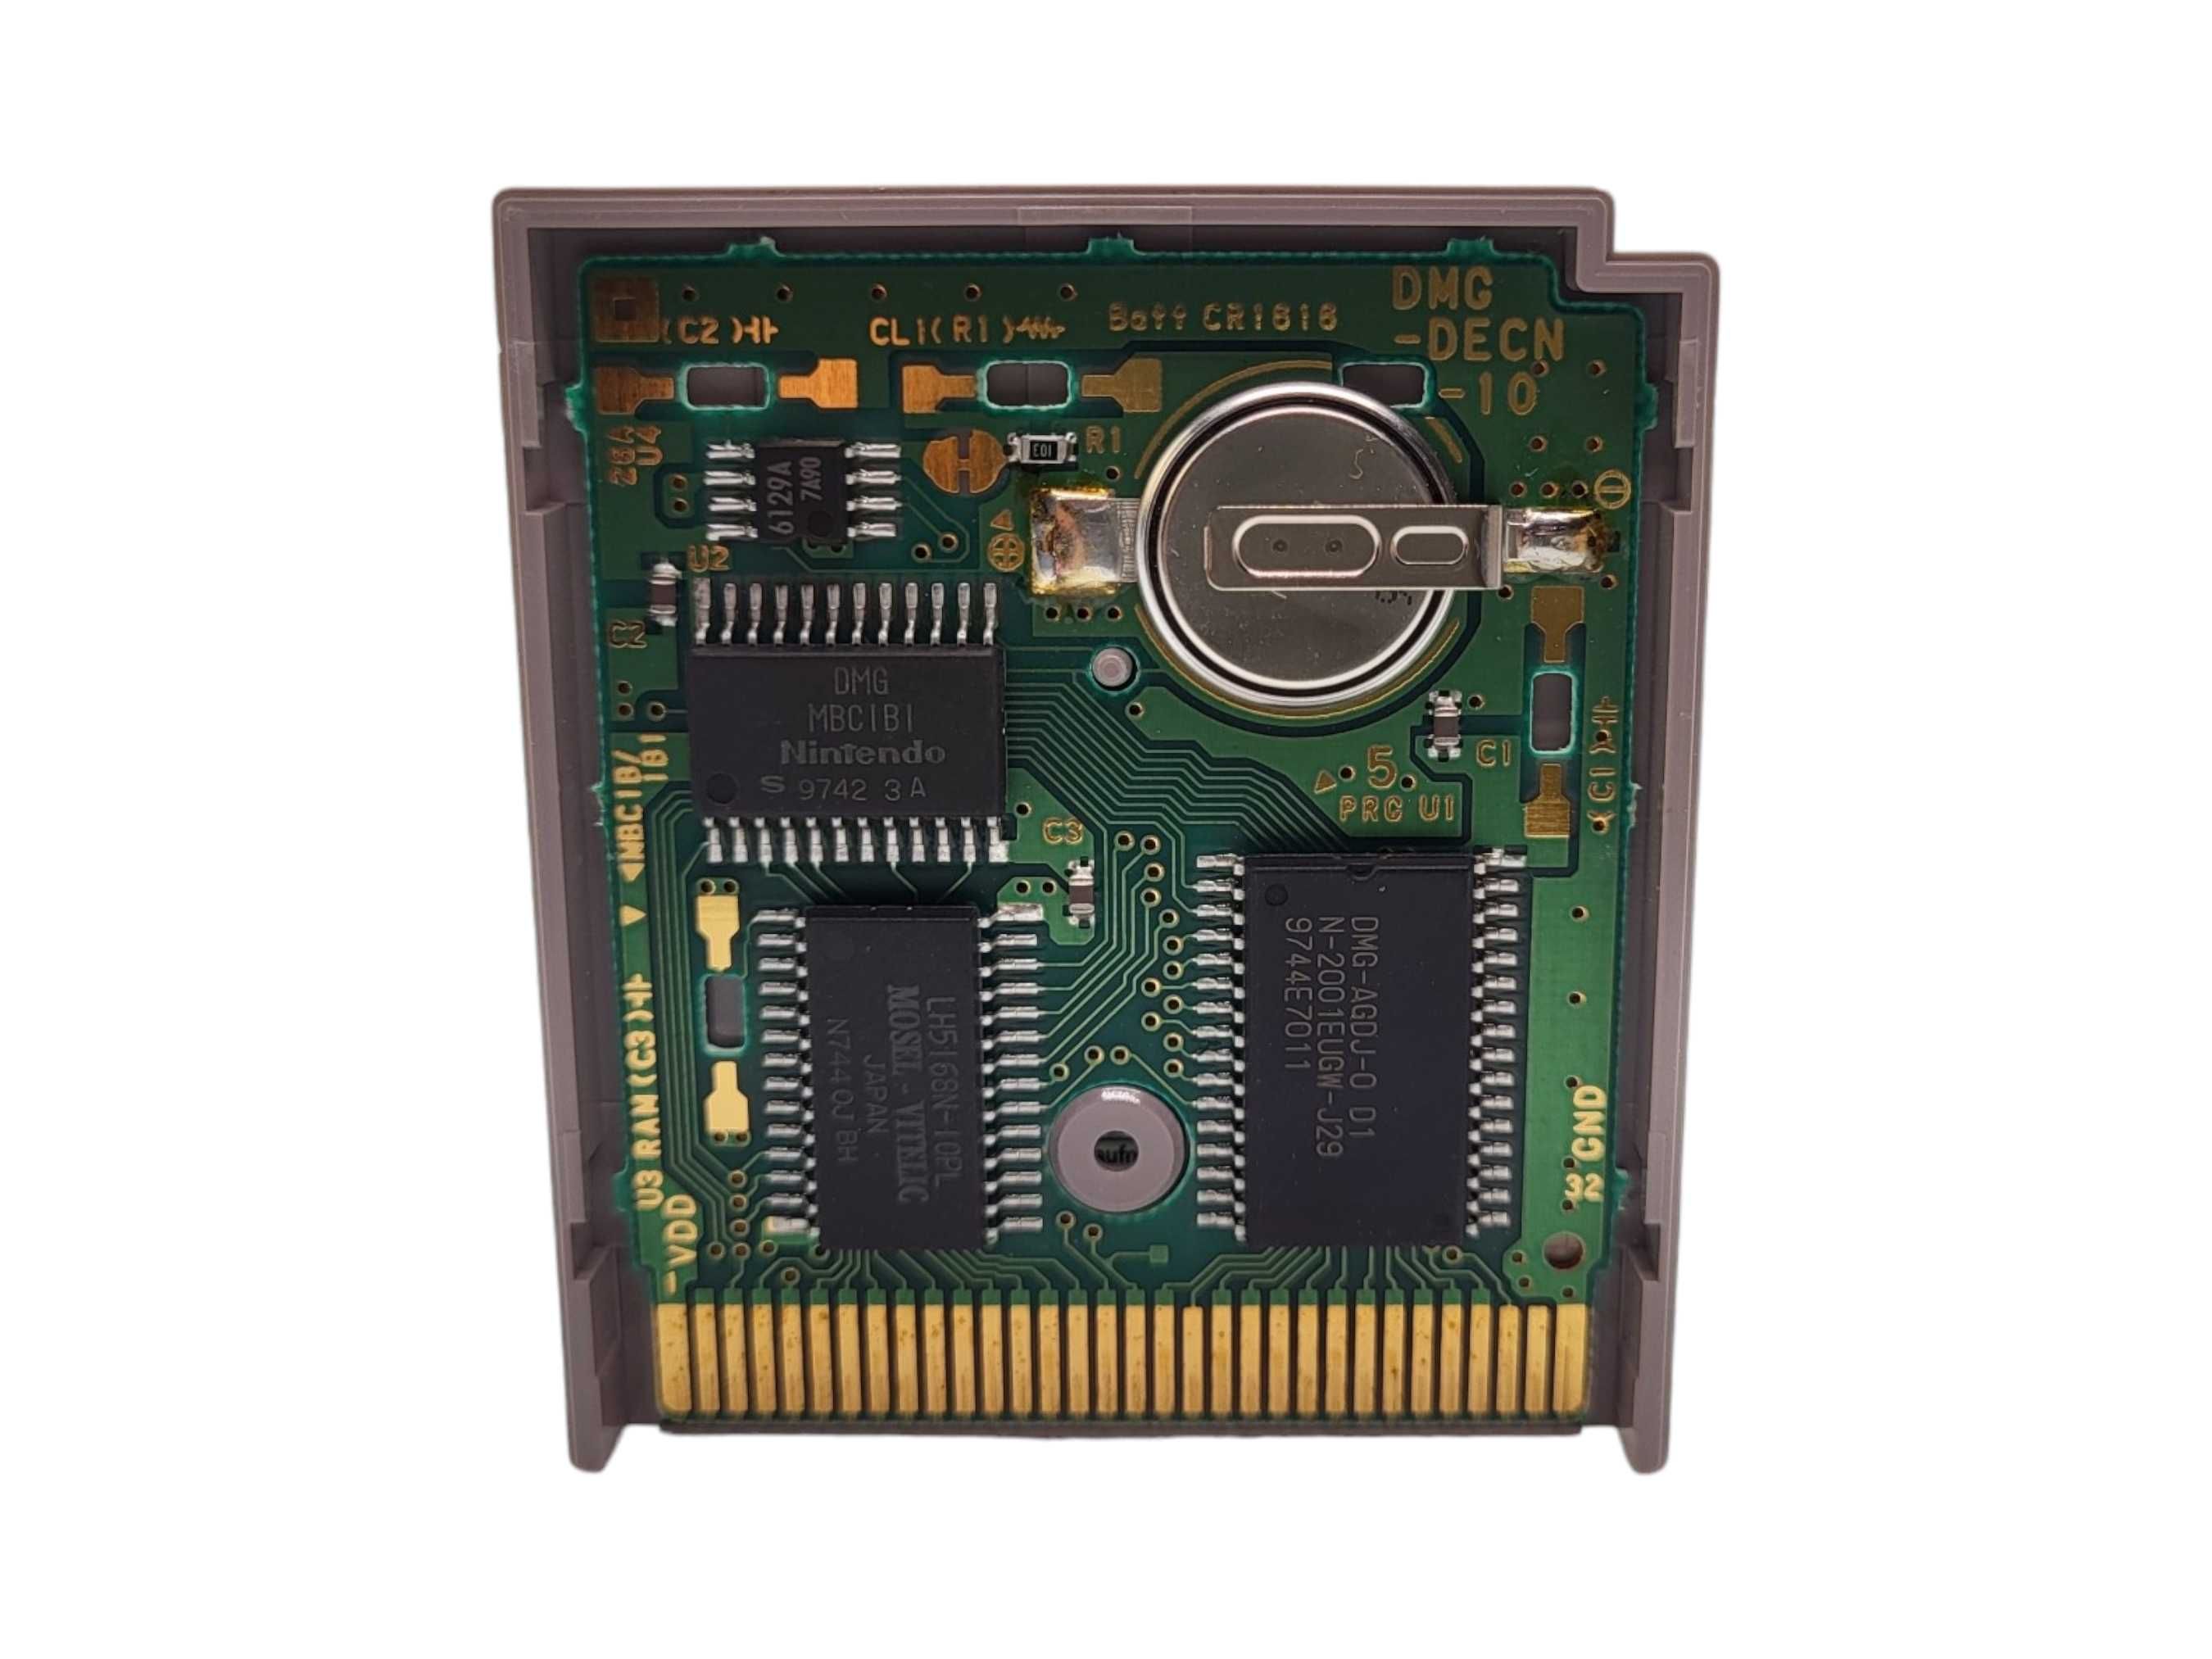 Ganbare Goemon Game Boy Gameboy Classic